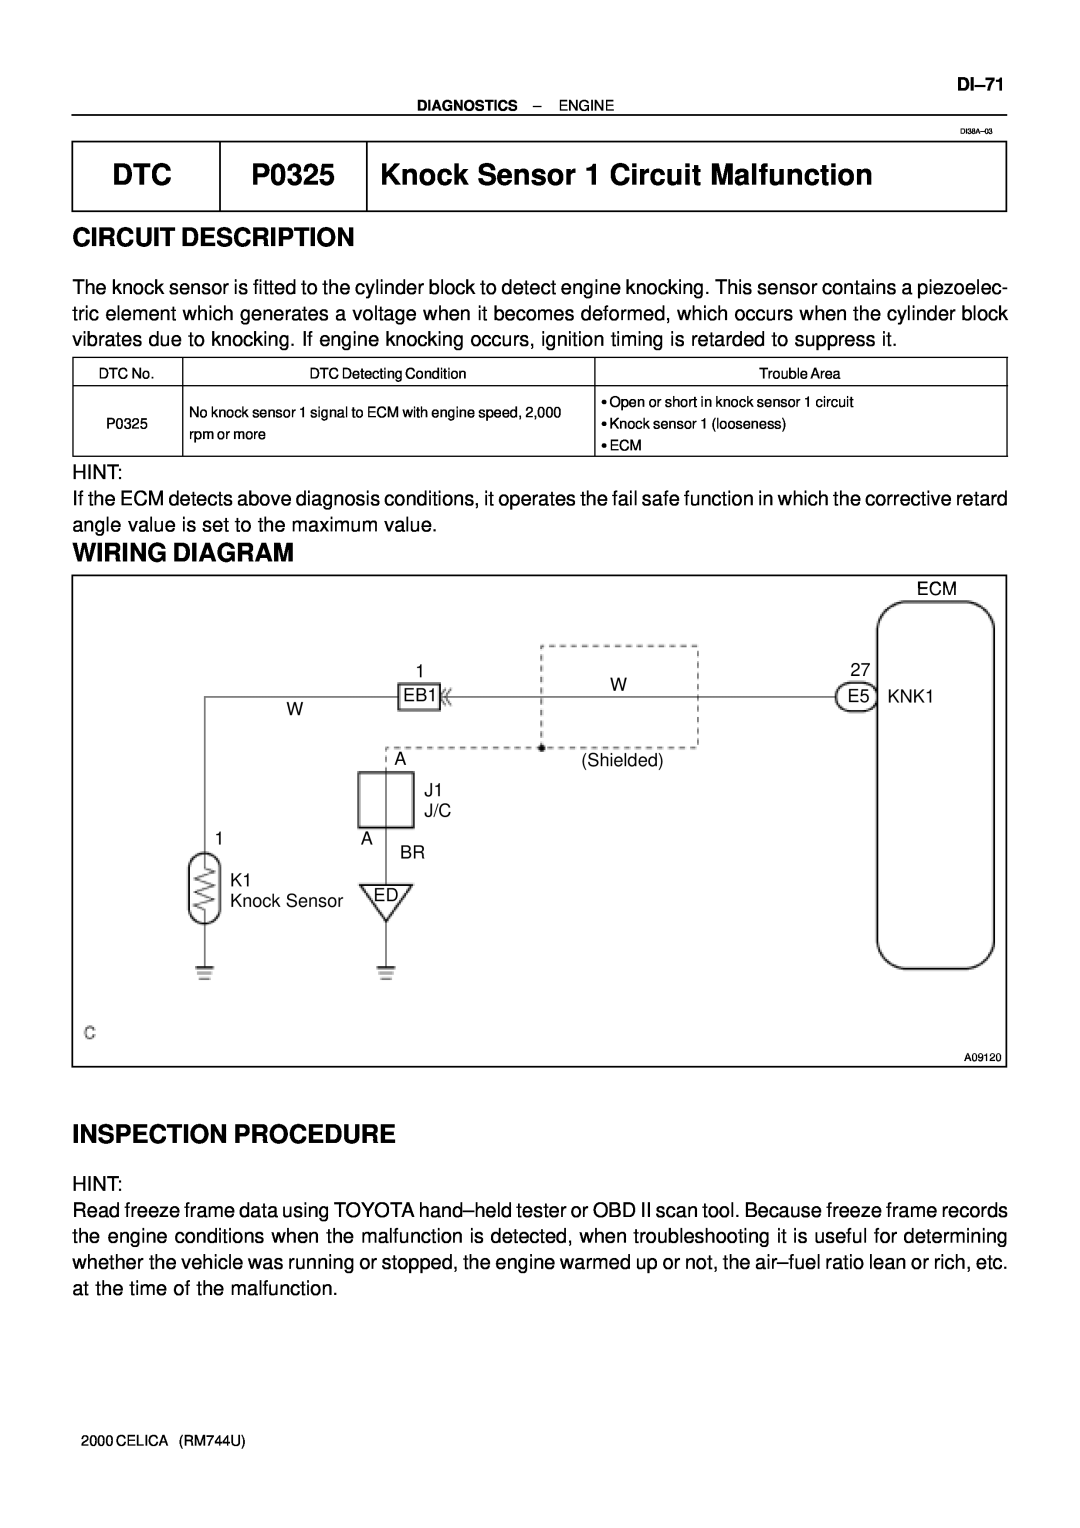 Toyota P0325 manual Knock Sensor 1 Circuit Malfunction, Circuit Description, Wiring Diagram, Inspection Procedure 